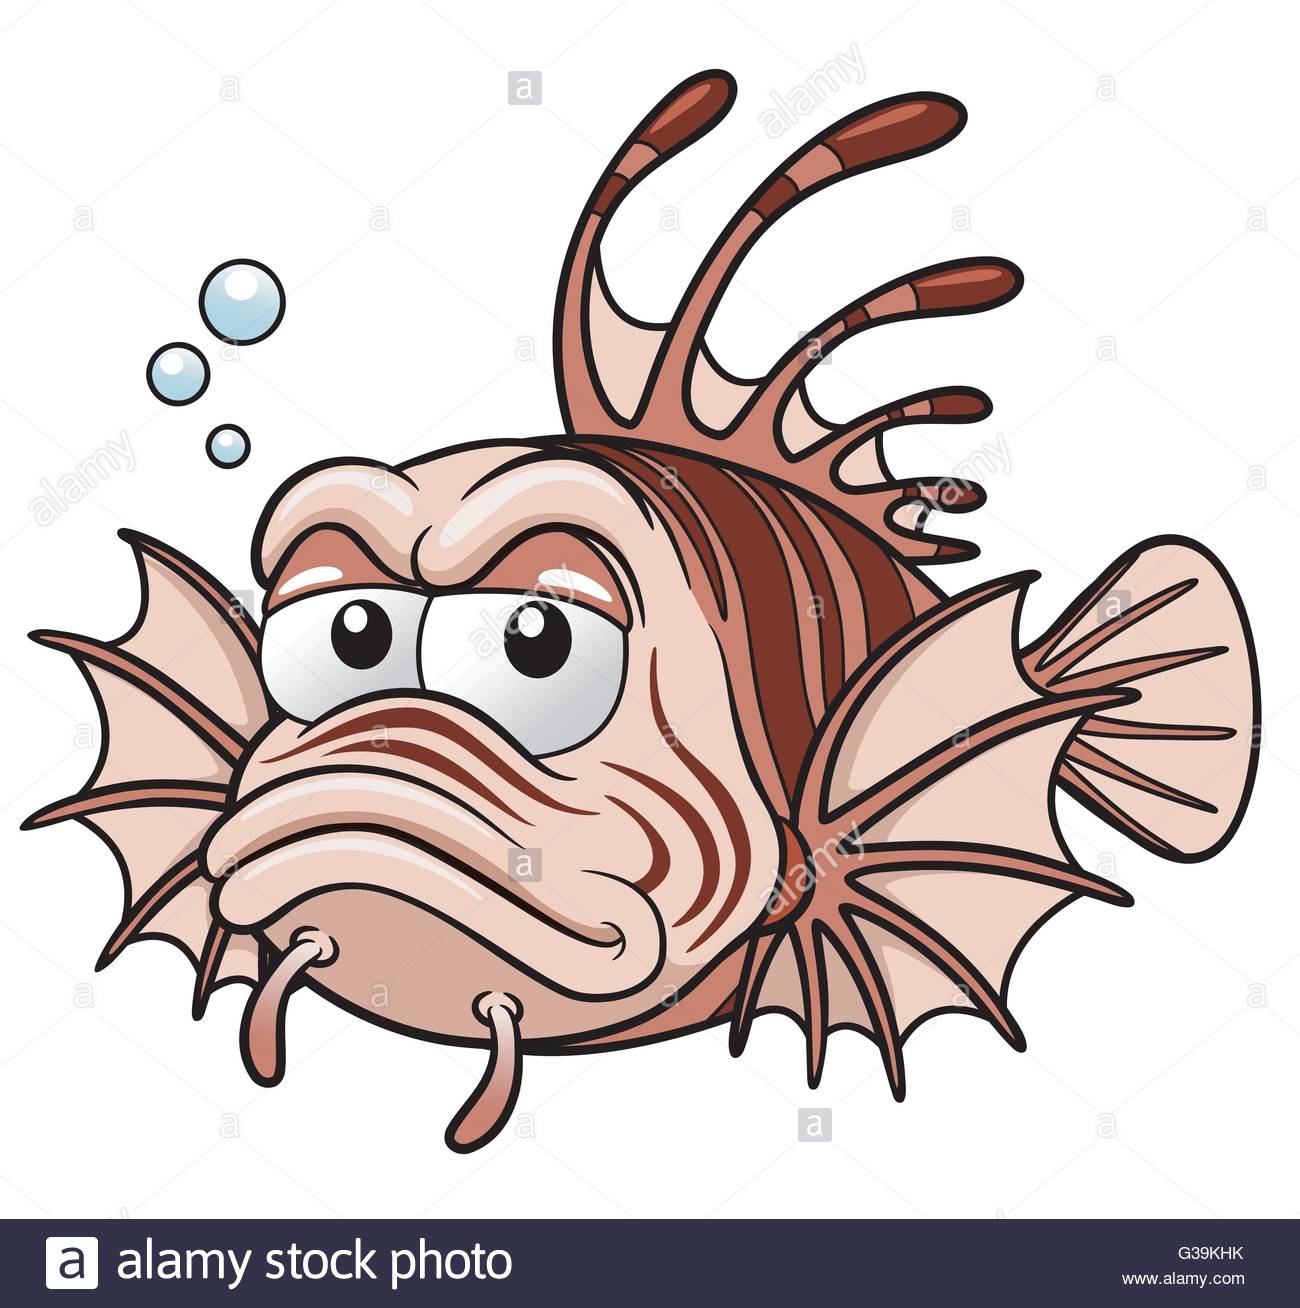 images of cartoon lionfish